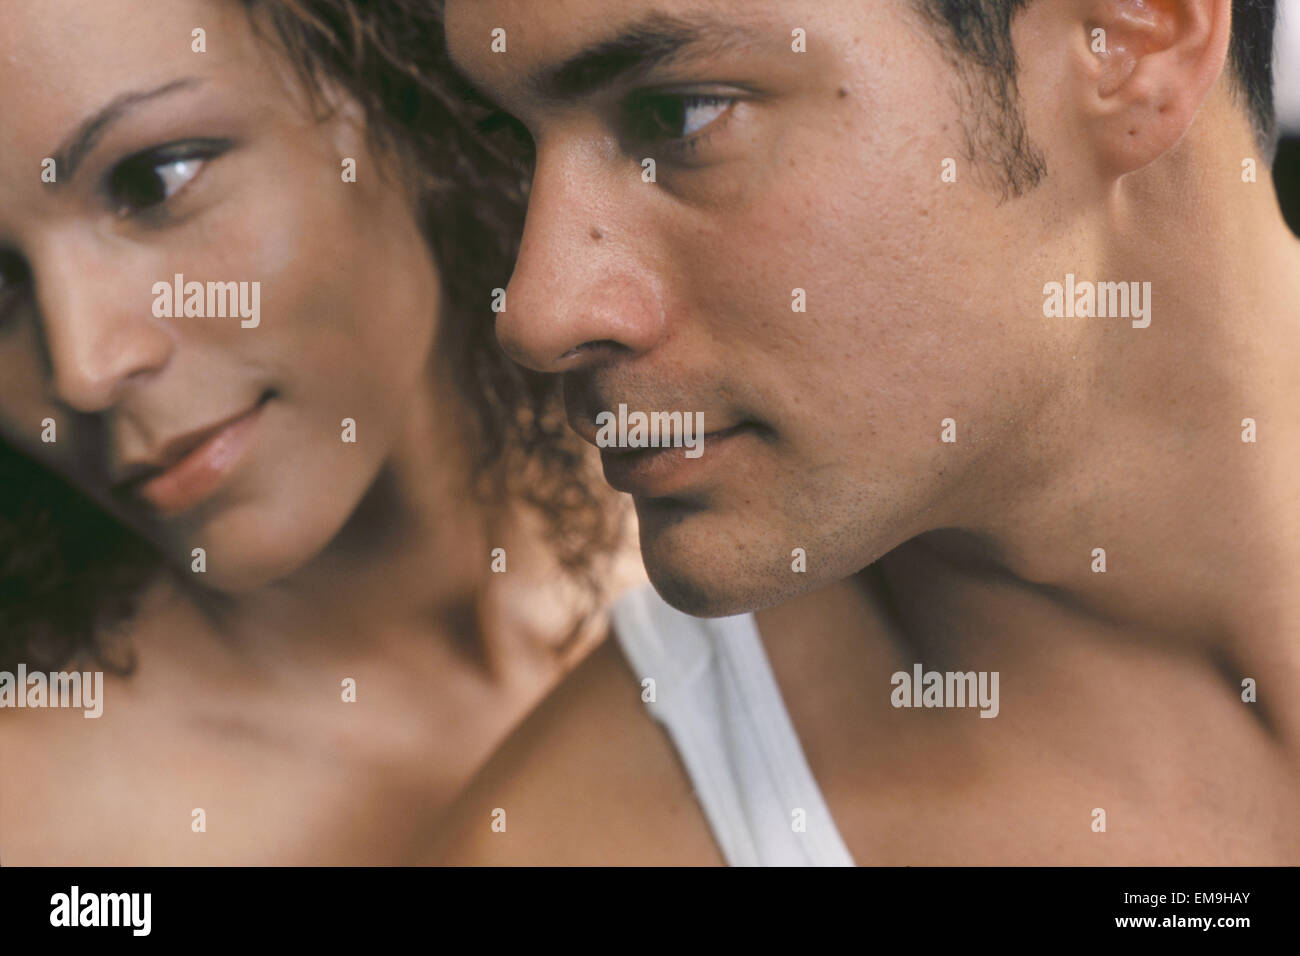 Close up portrait of romantic couple in profile Stock Photo